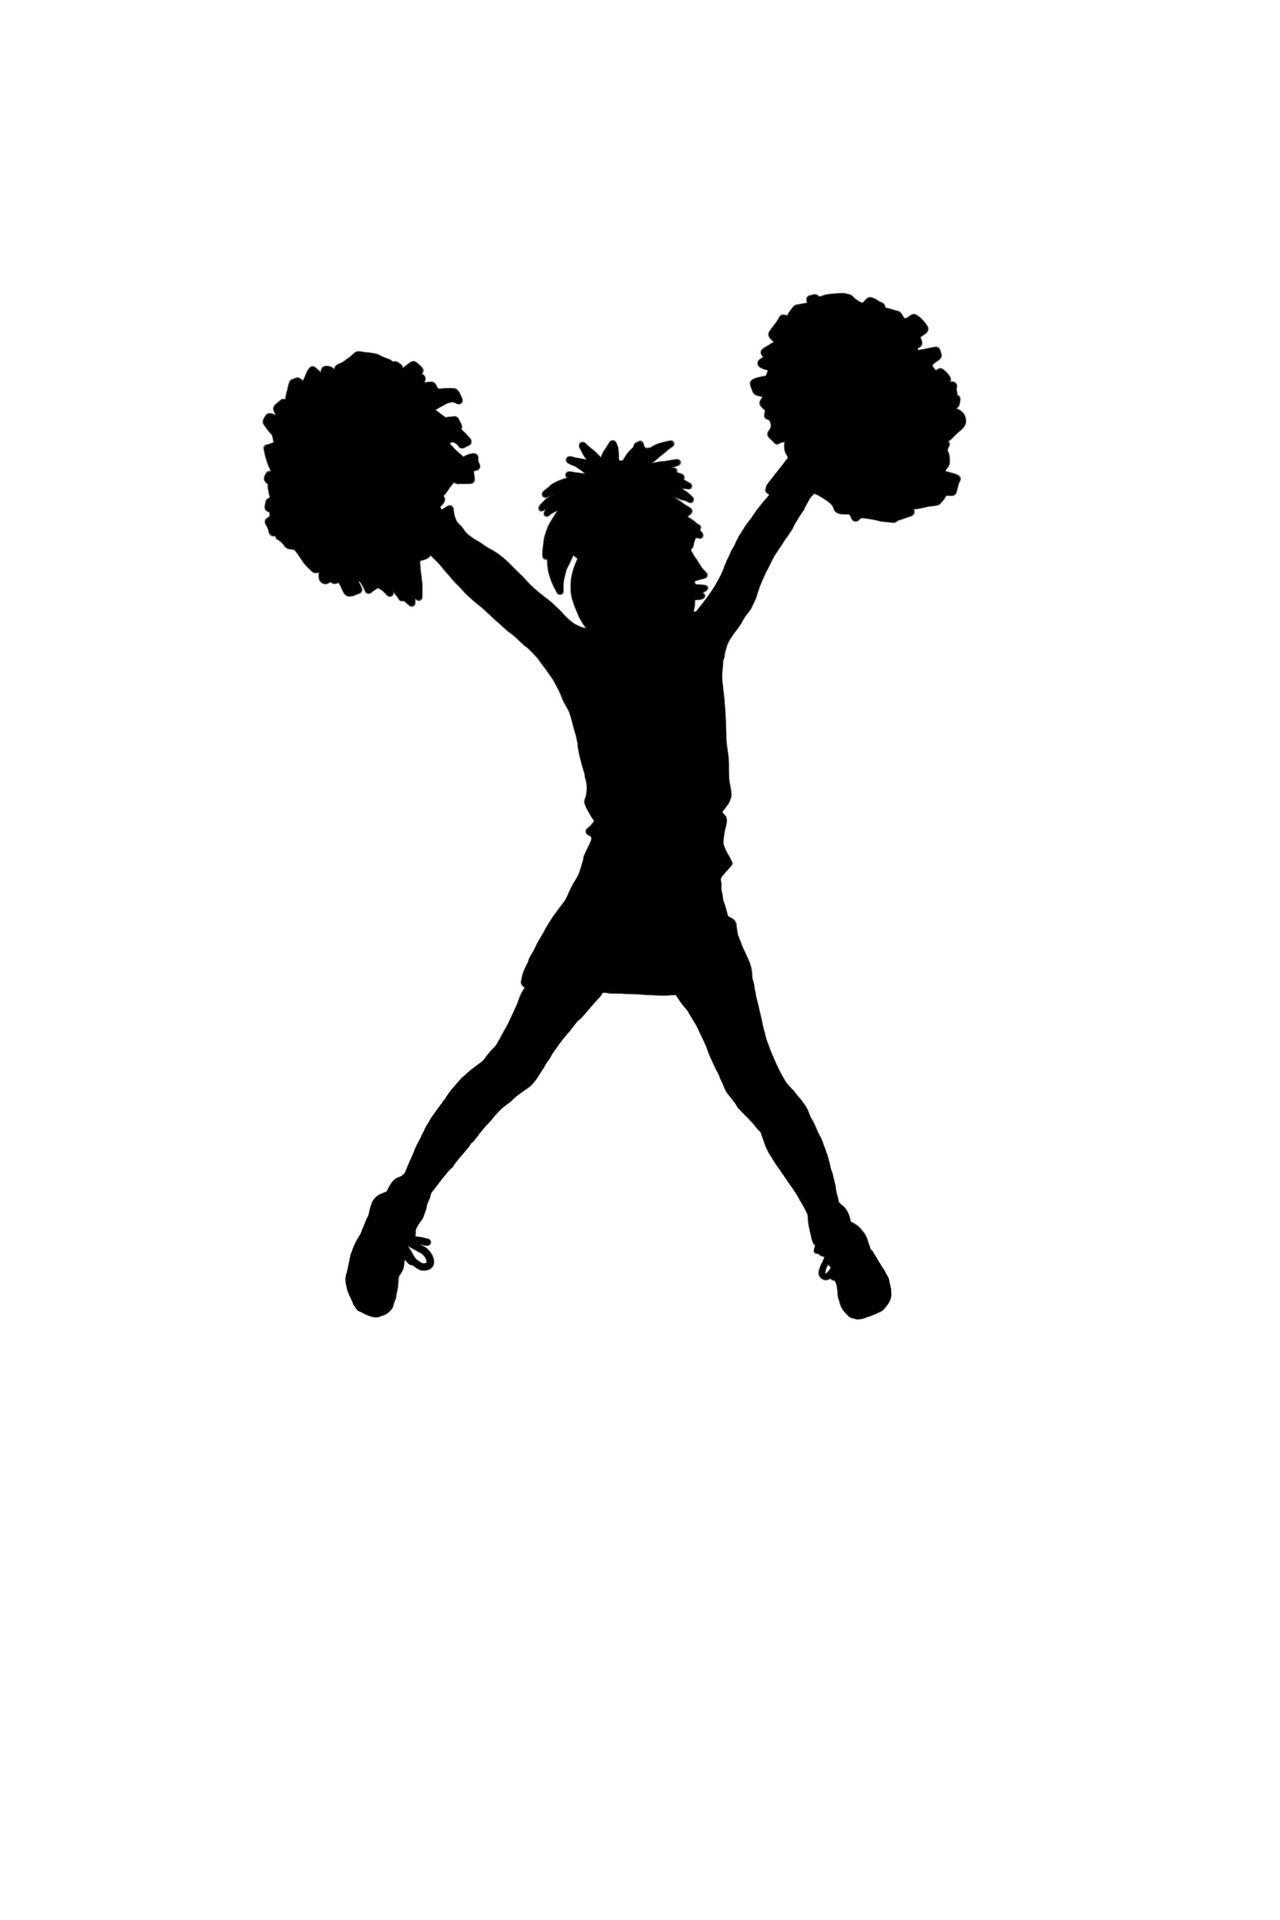 cheerleader_silhouette_template_by_toeppie_ddbmp1g-fullview